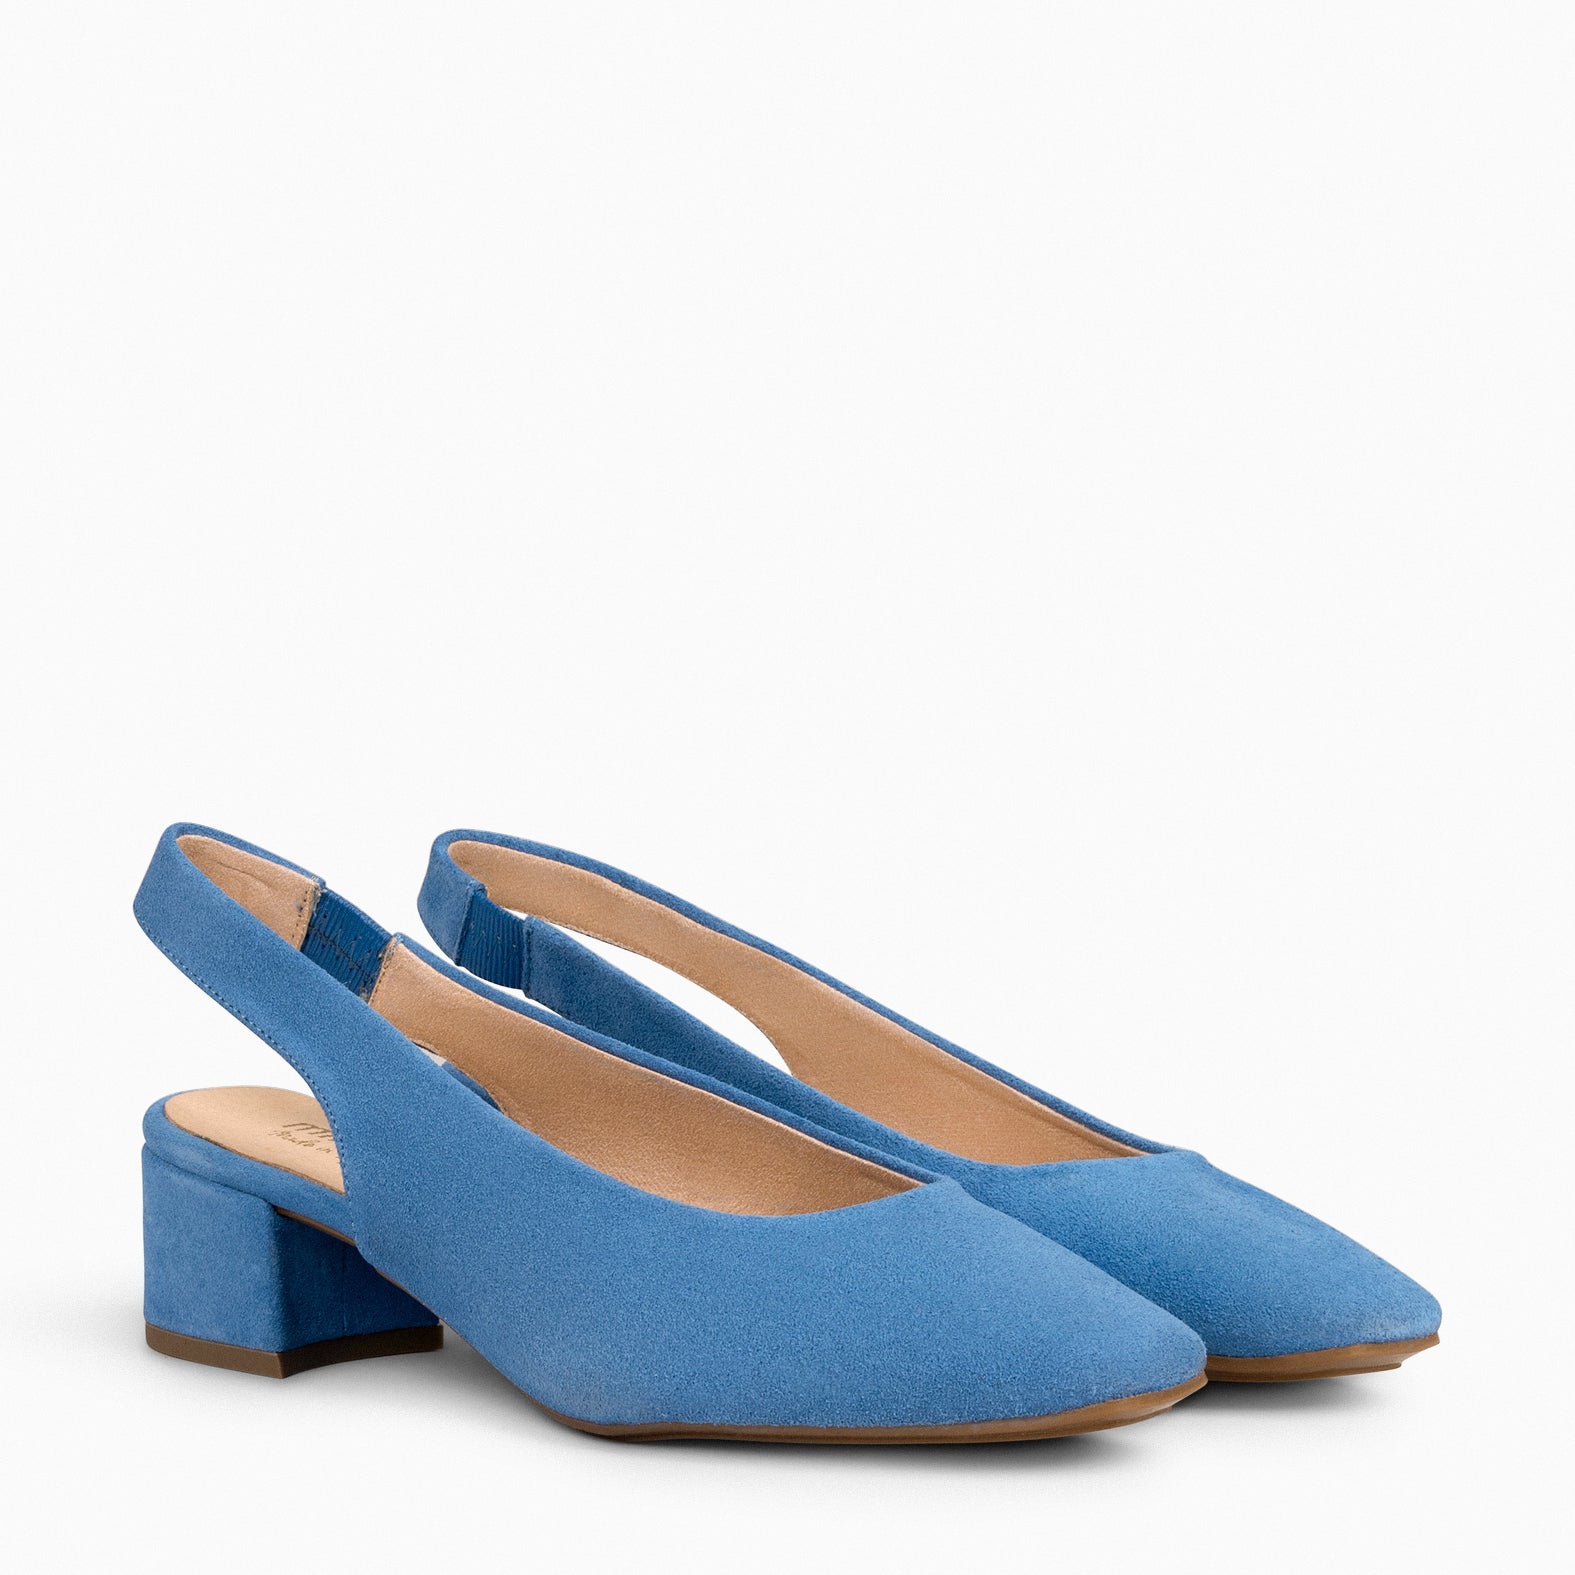 URBAN LADY – BLUE slingback mid heels